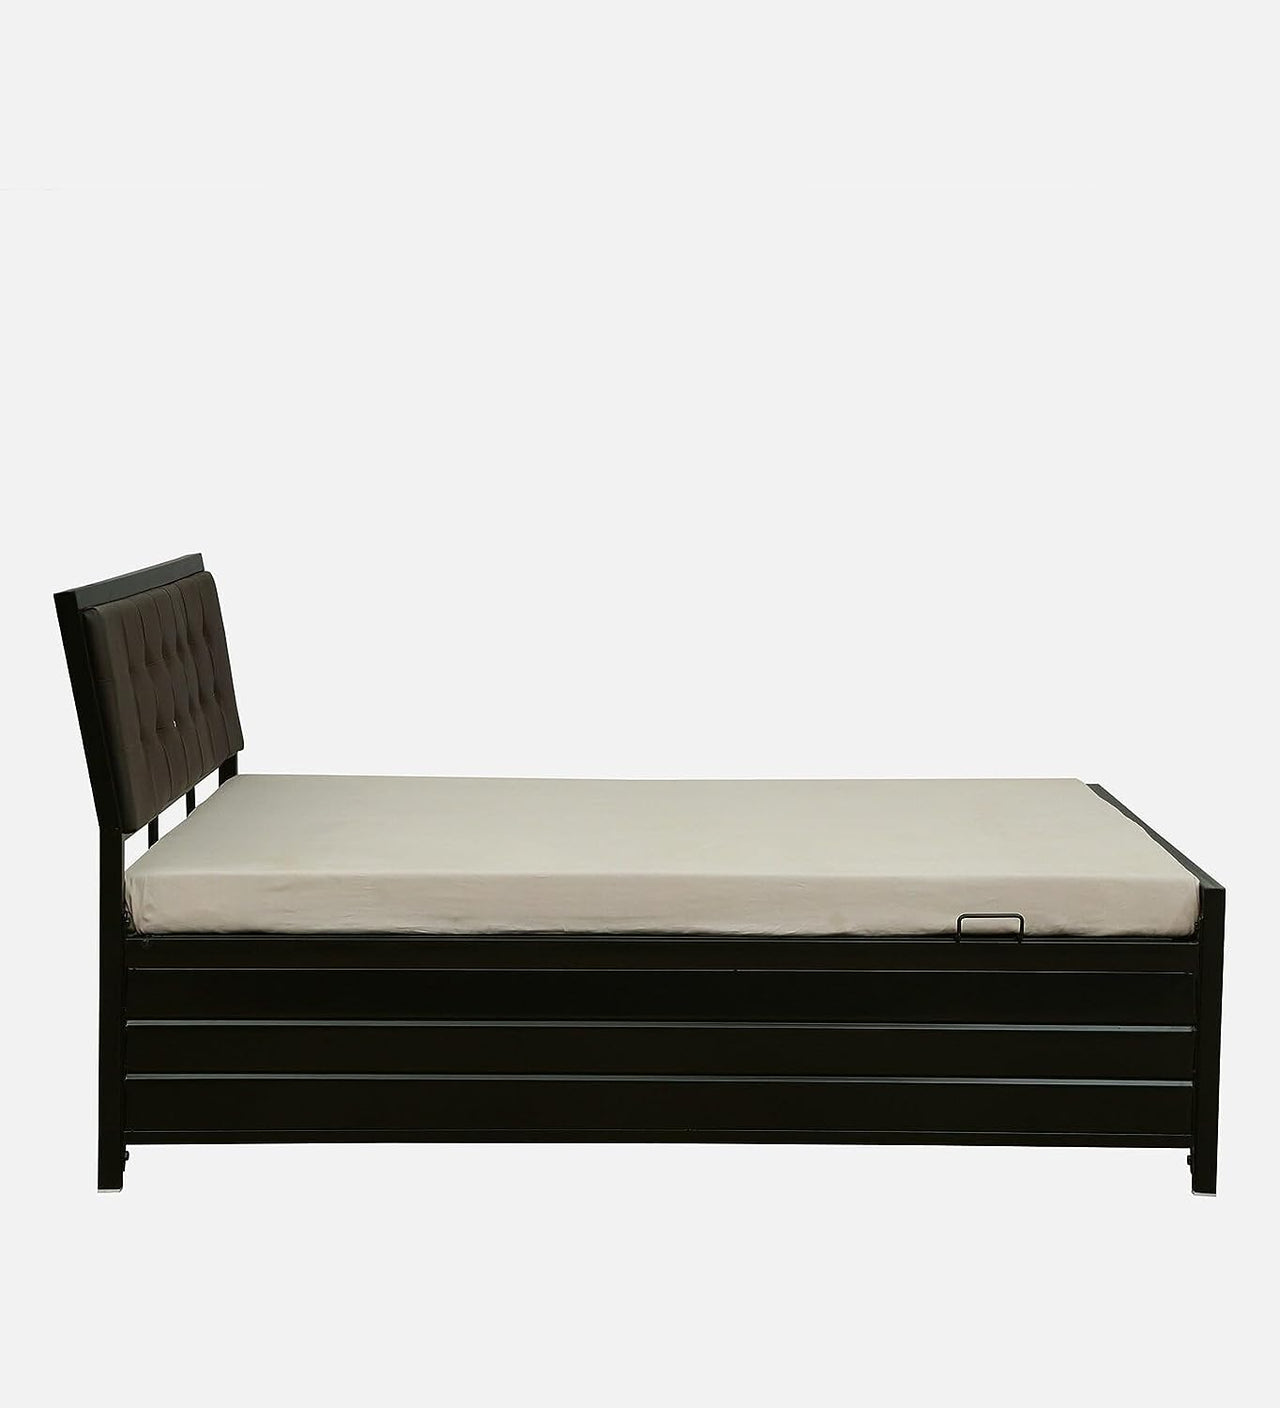 Heath Hydraulic Storage Double Metal Bed with Black Cushion Headrest (Color - Black)